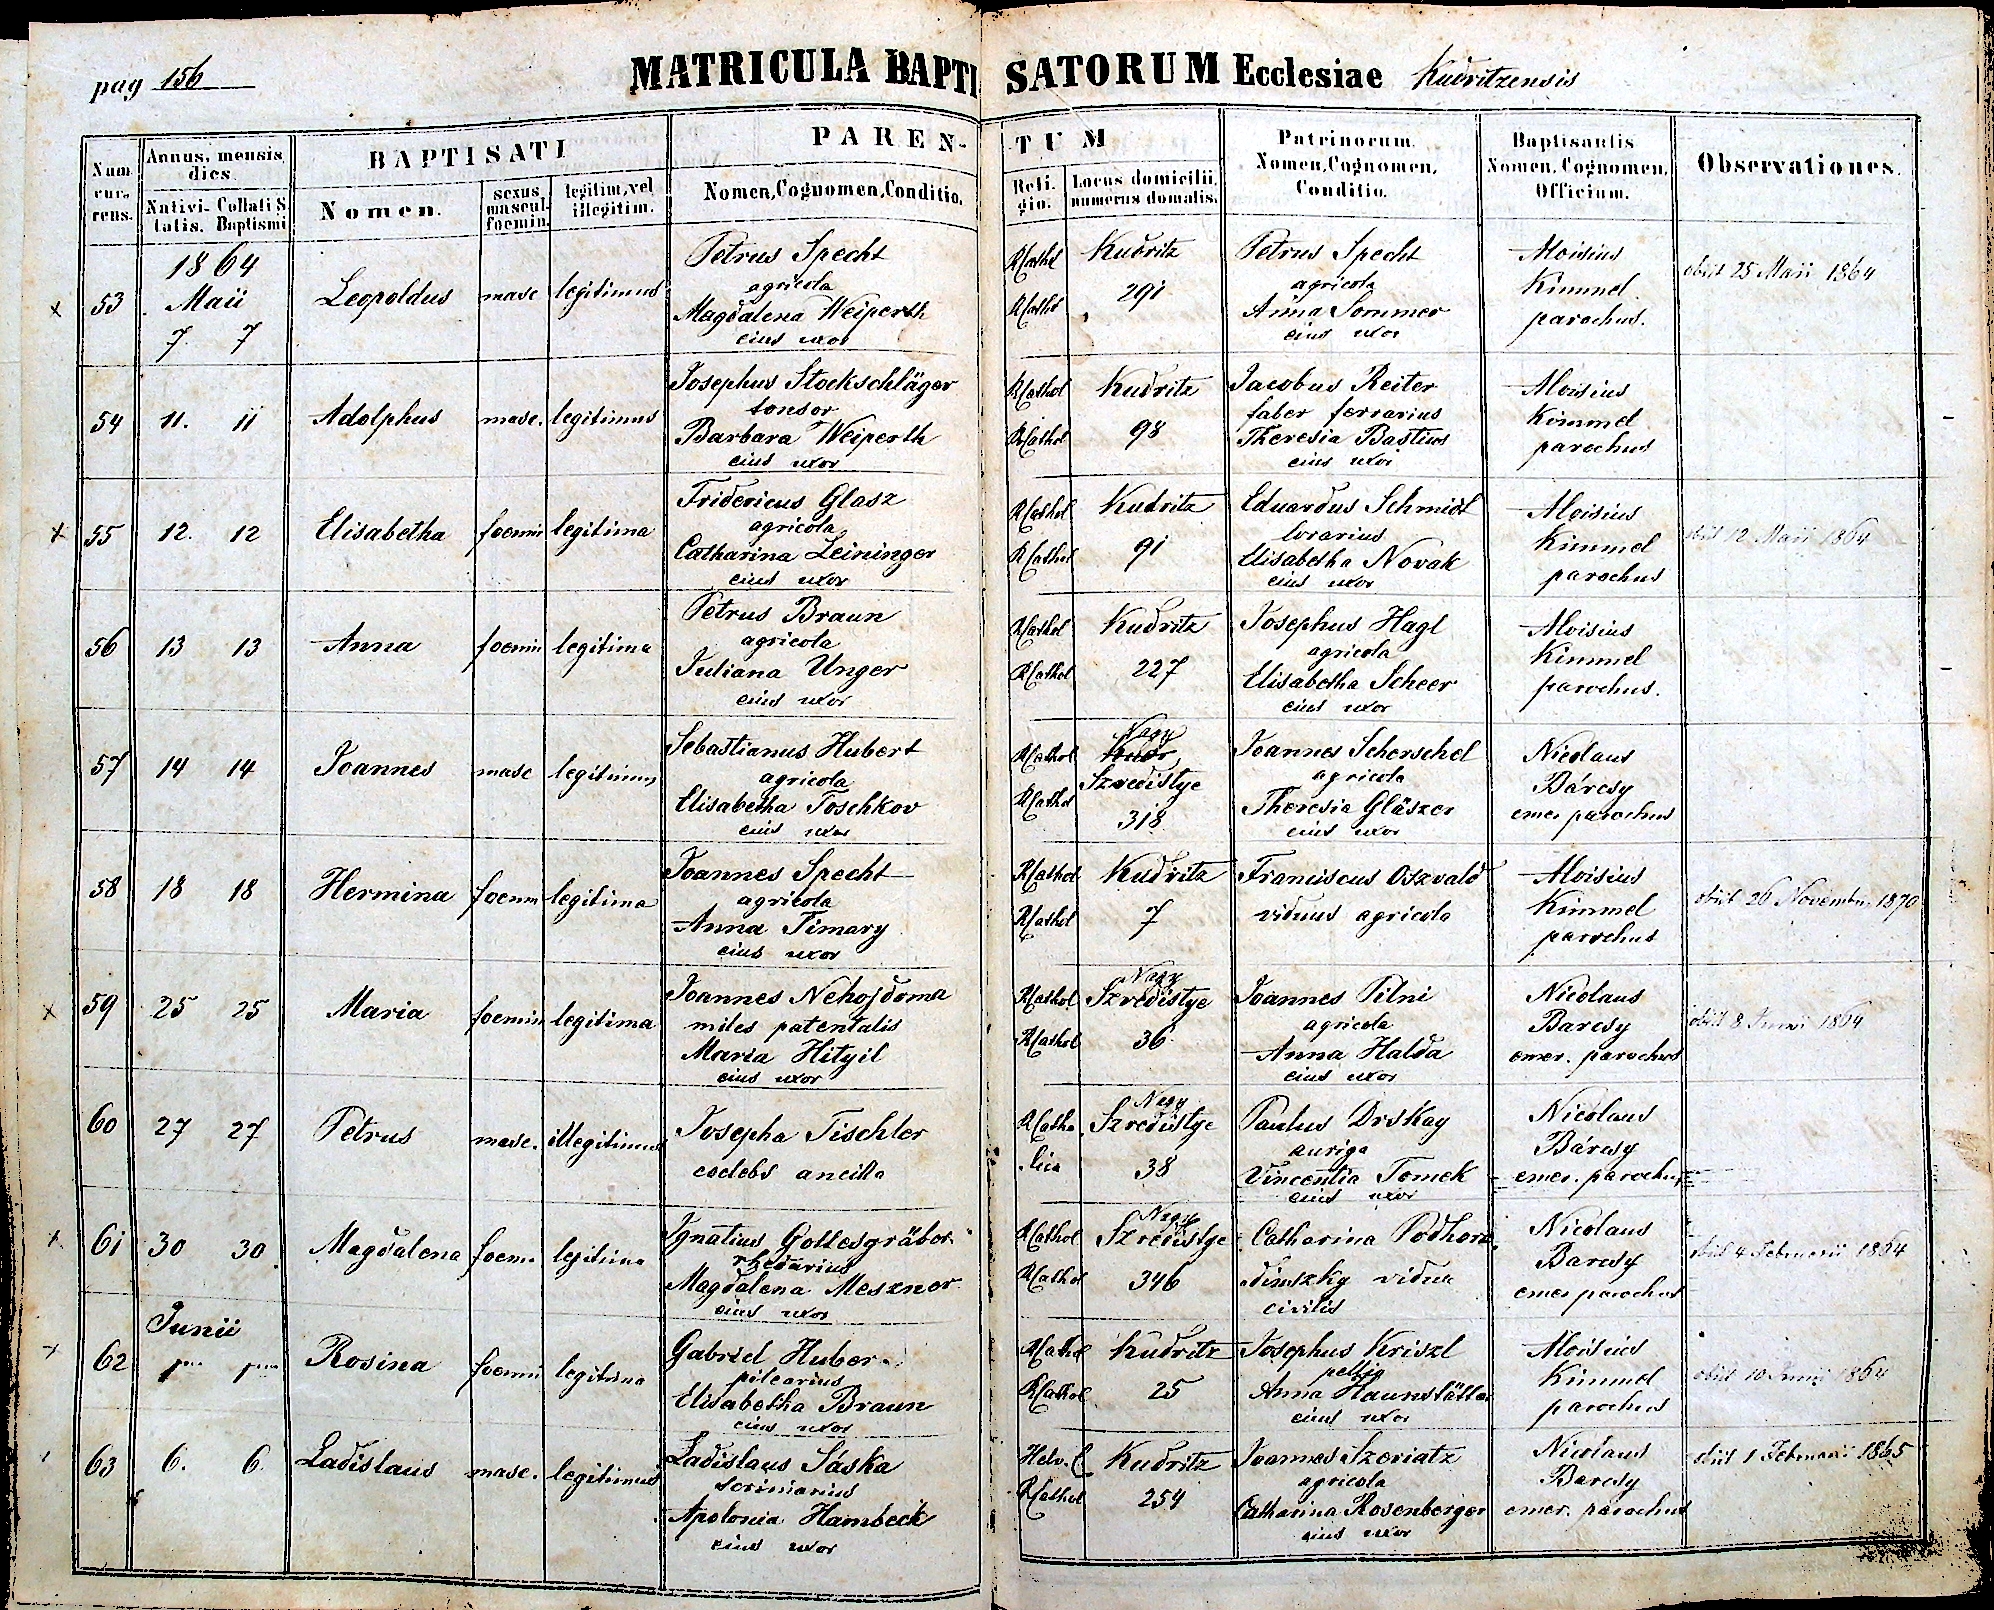 images/church_records/BIRTHS/1852-1870B/156